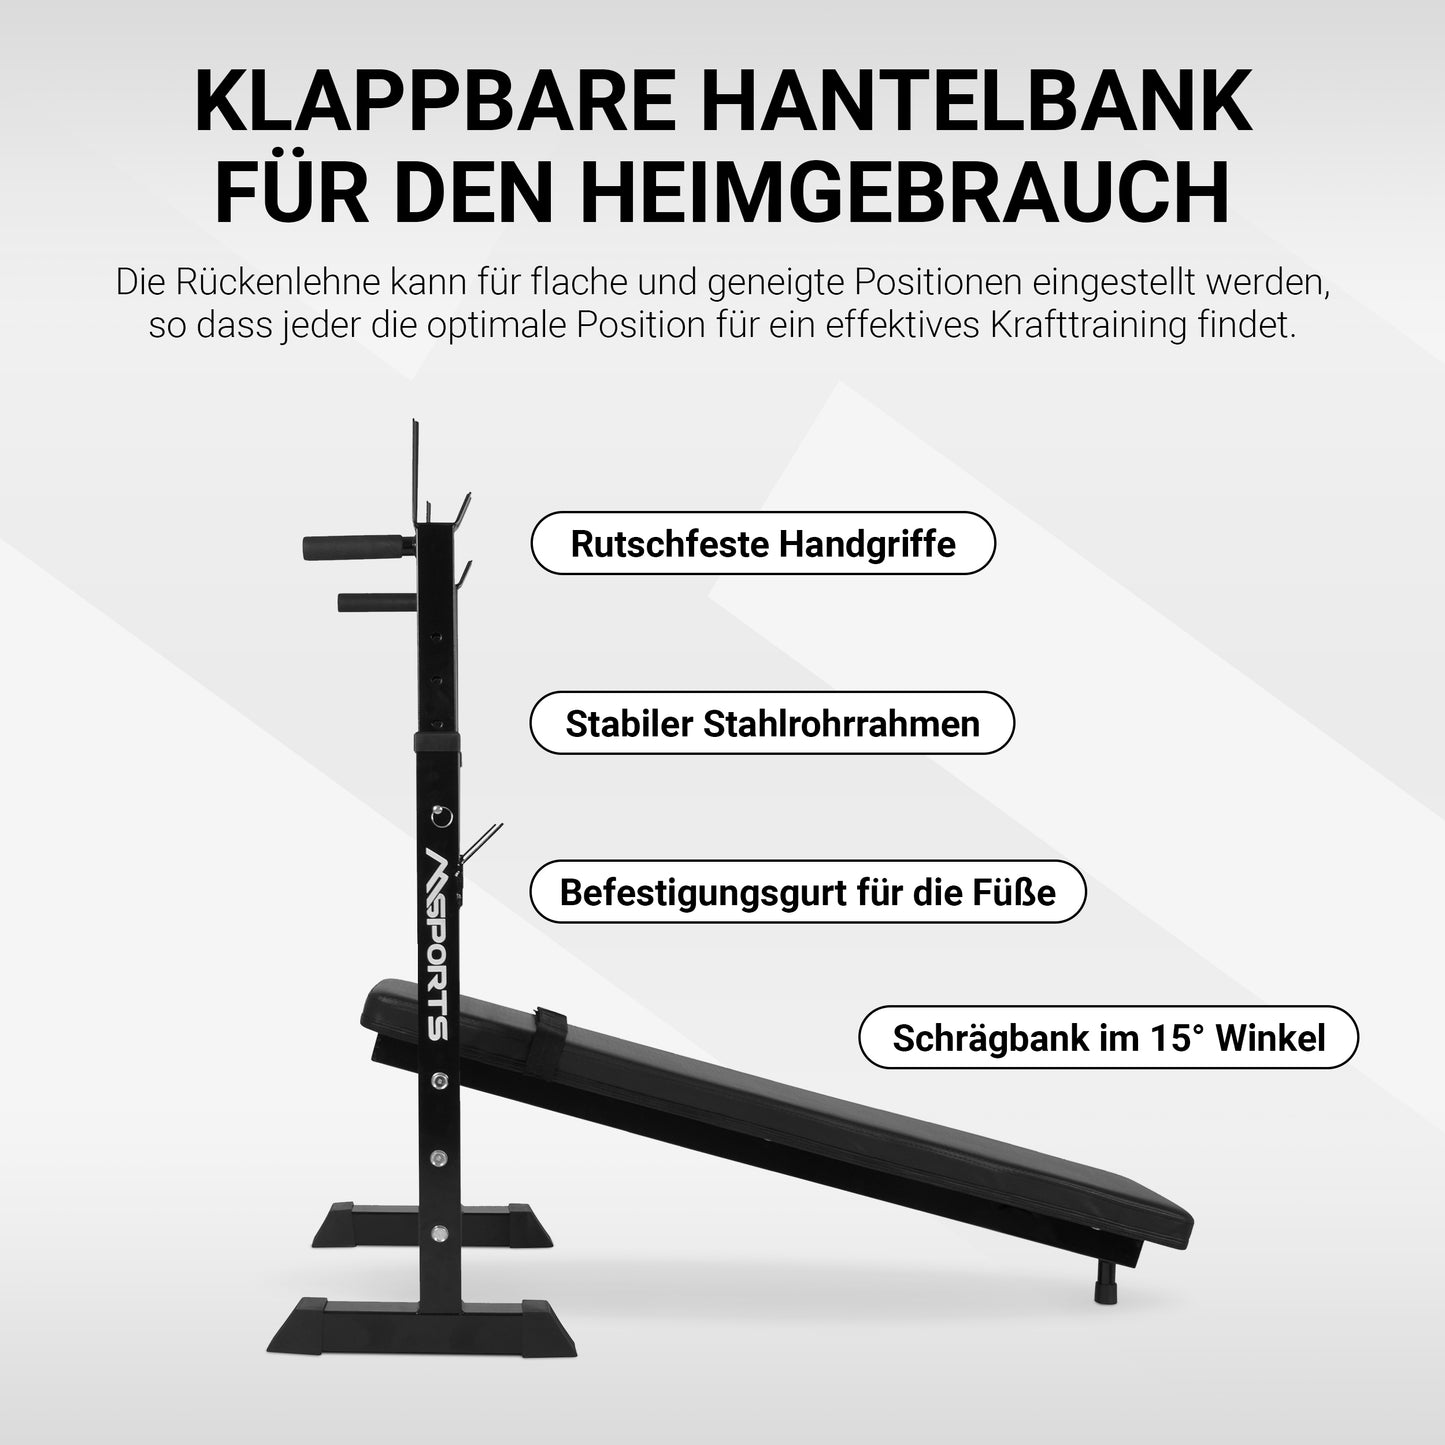 Hantelbank Professional